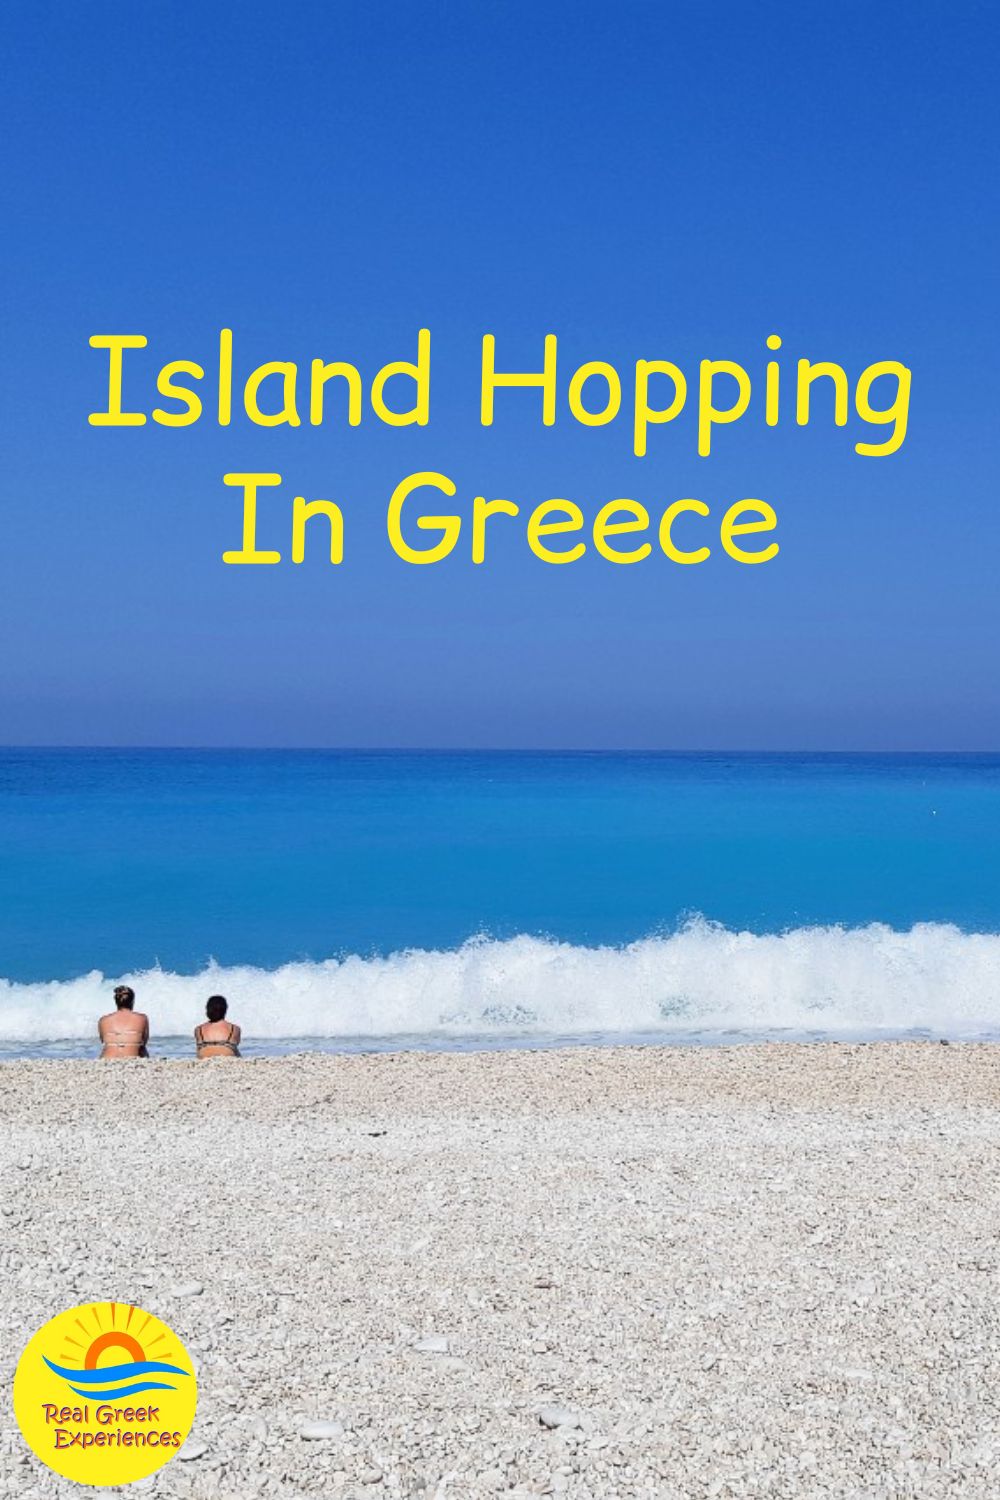 Guide to Greek island hopping